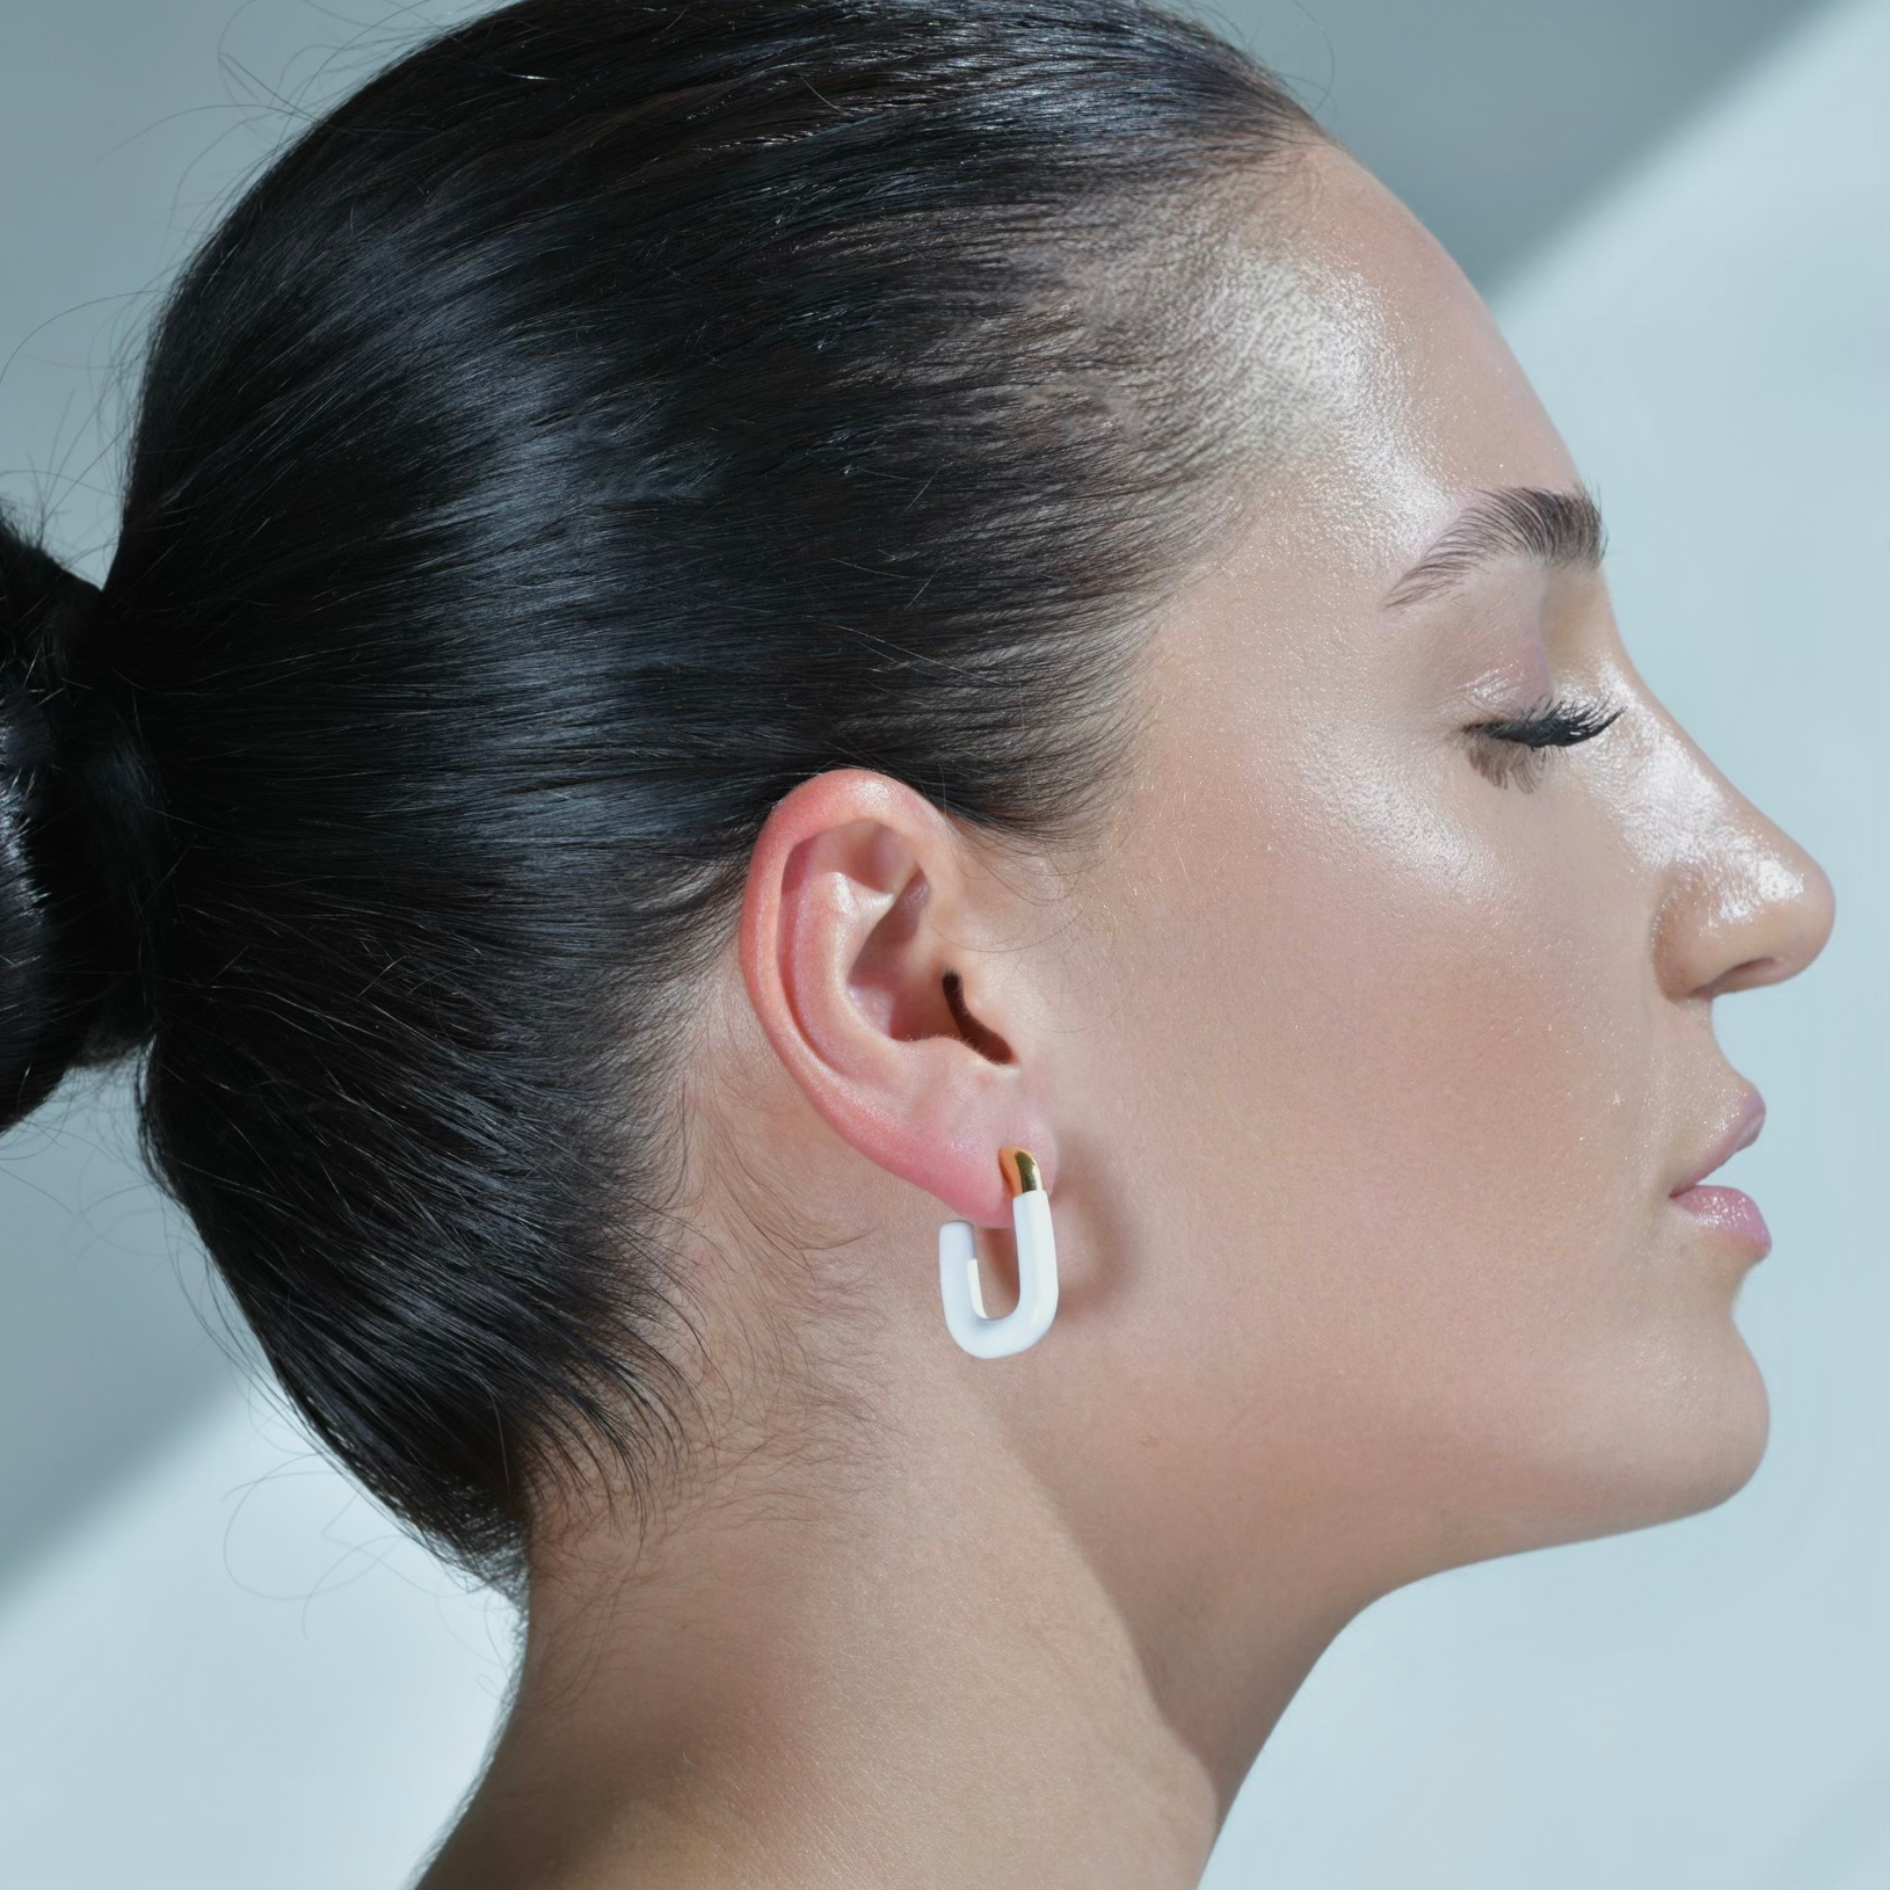 Gold Hoop Earrings Shaped in the form of letter U, more than half painted in white Enamel. Model wearing the earrings